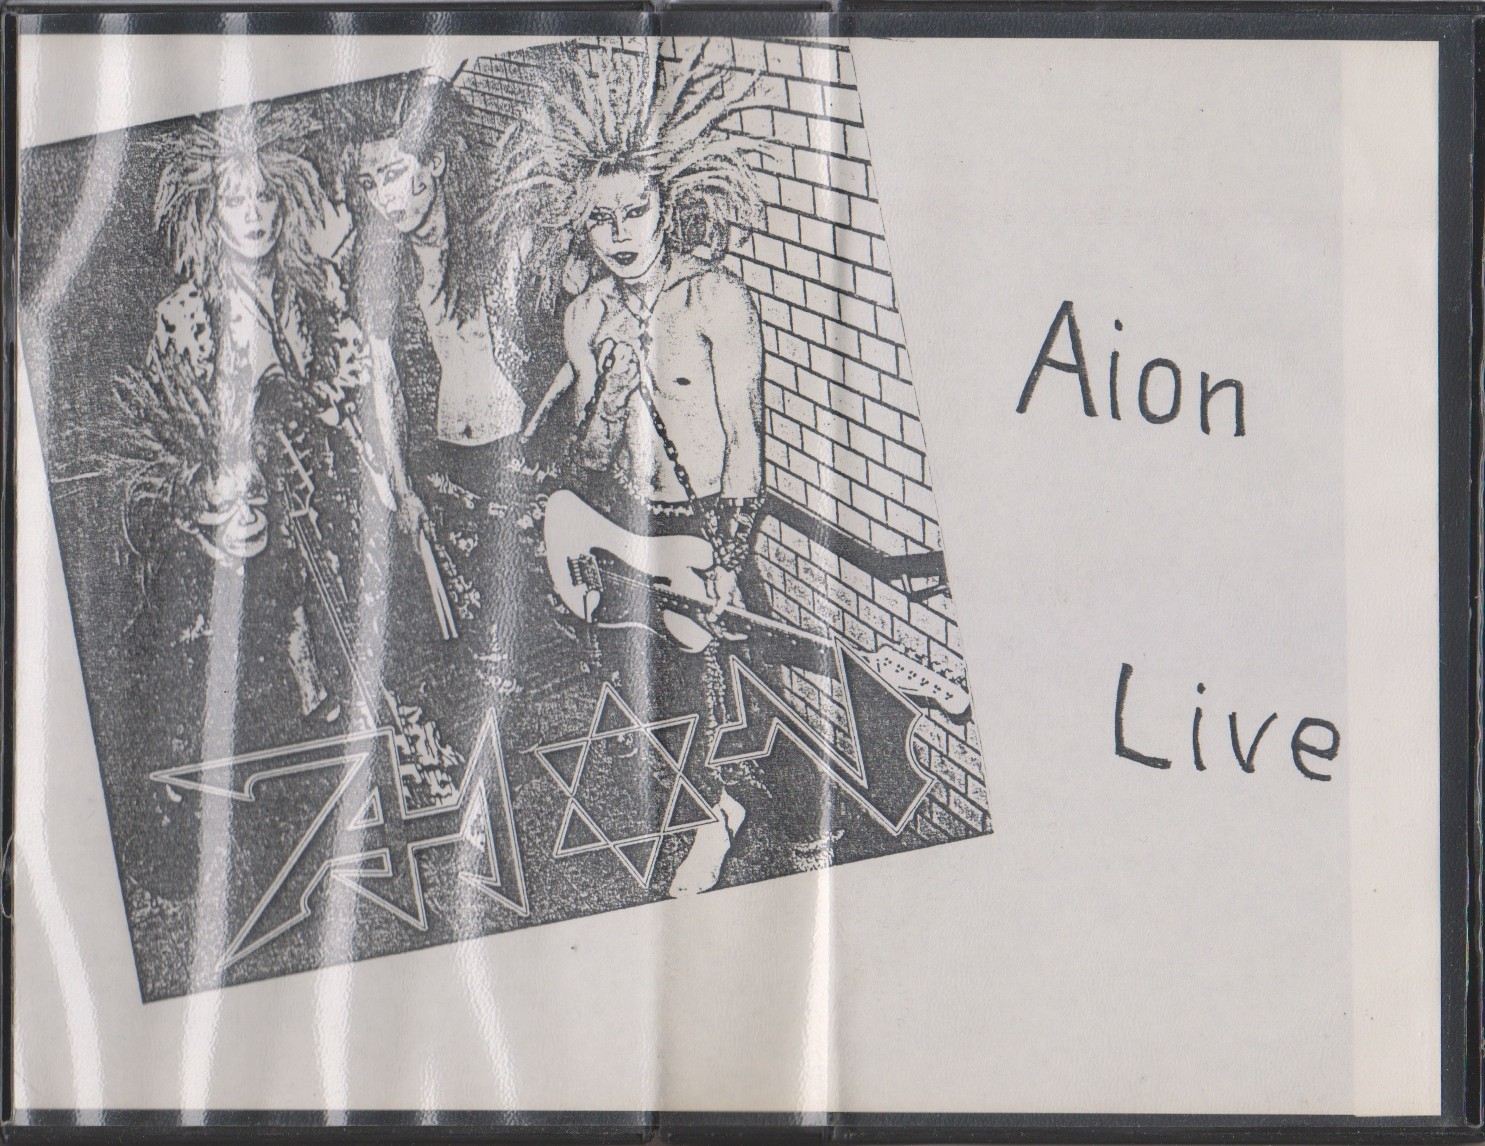 AION ( アイオン )  の ビデオ Aion Live